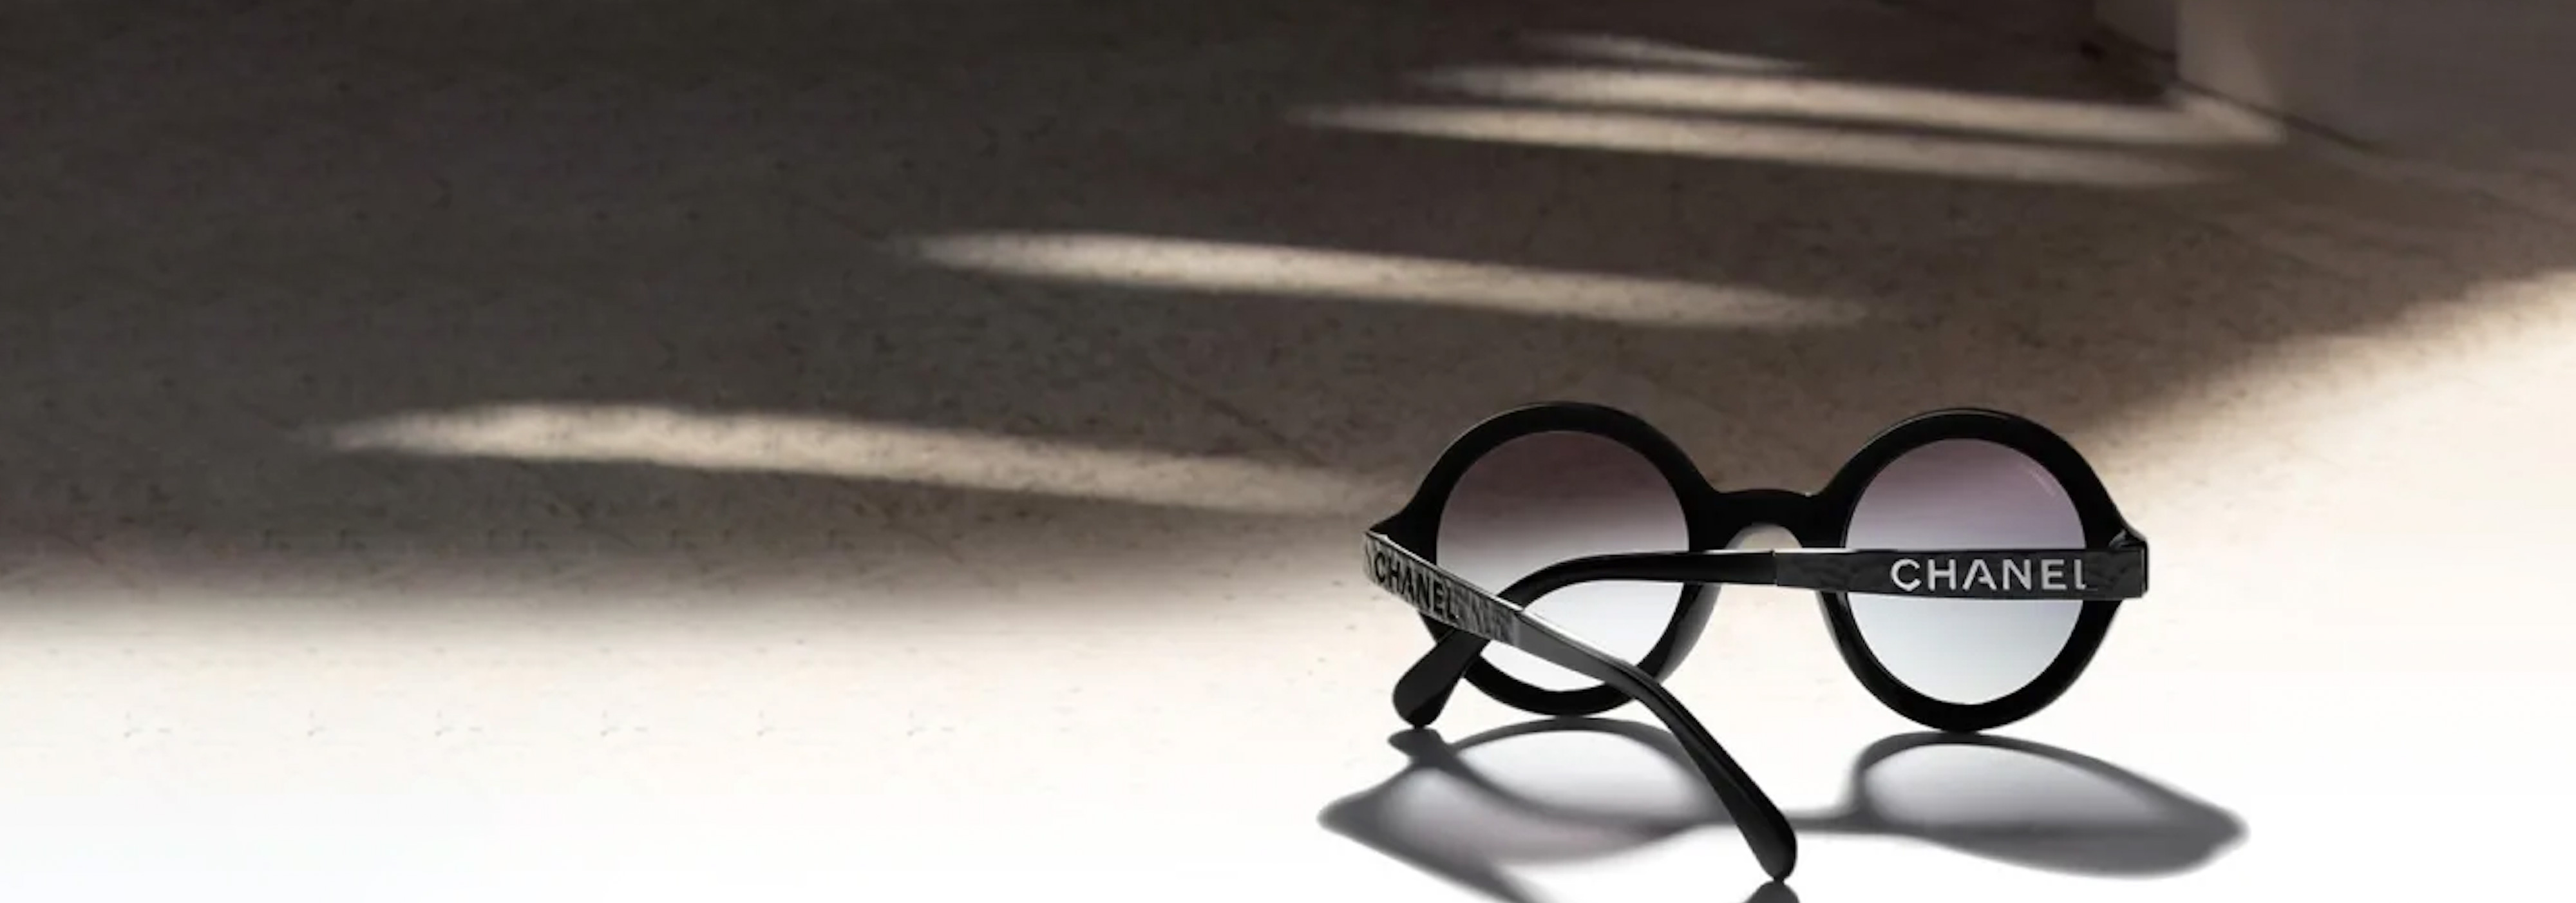 designer frames from Chanel - Northern Ireland Optician